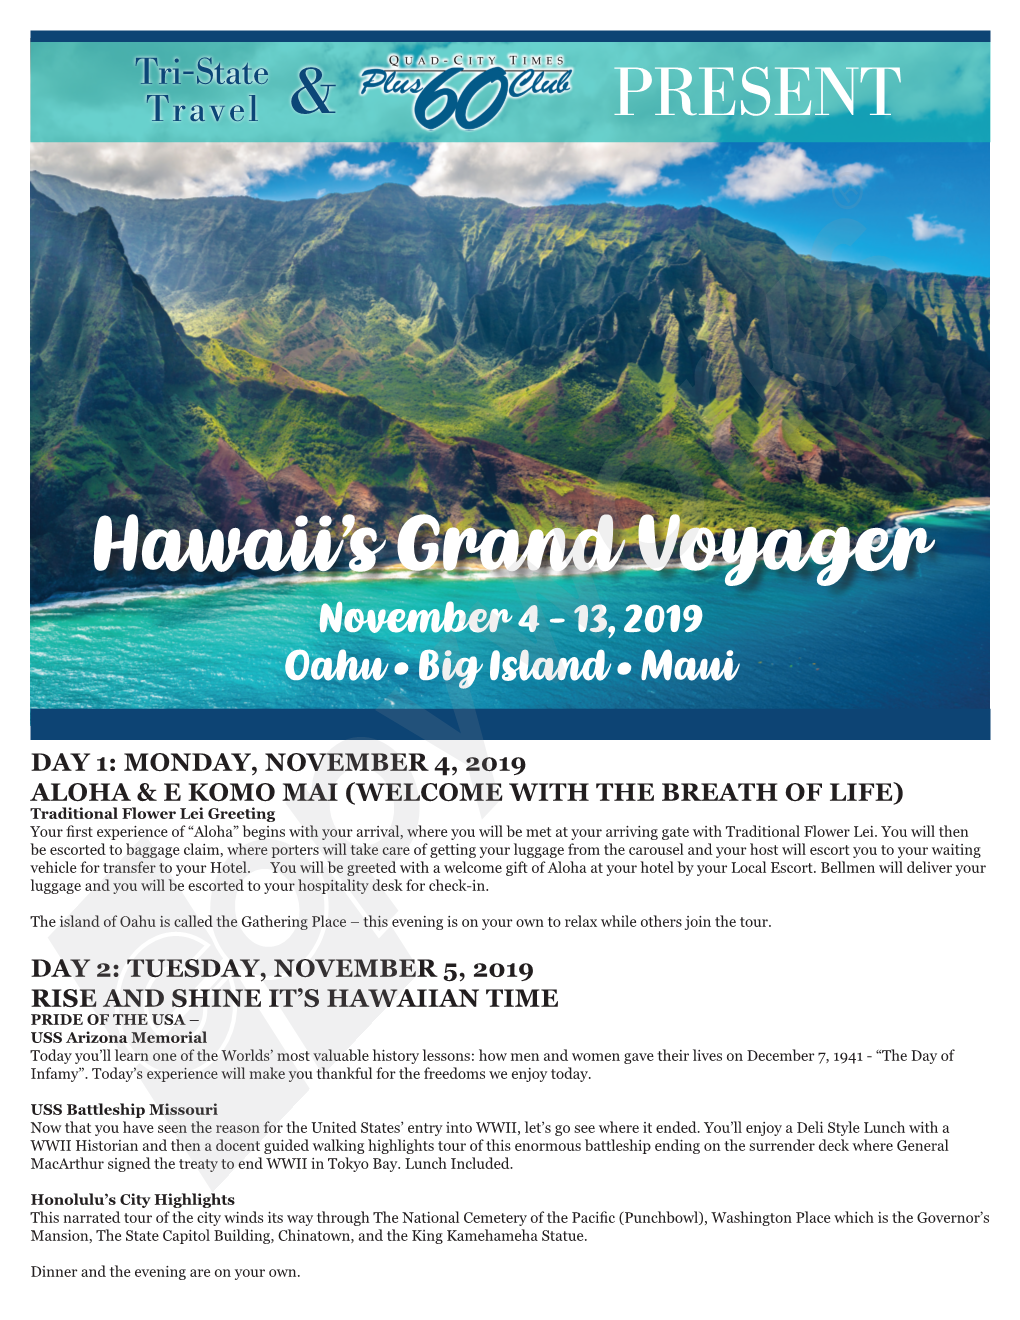 Hawaii's Grand Voyager